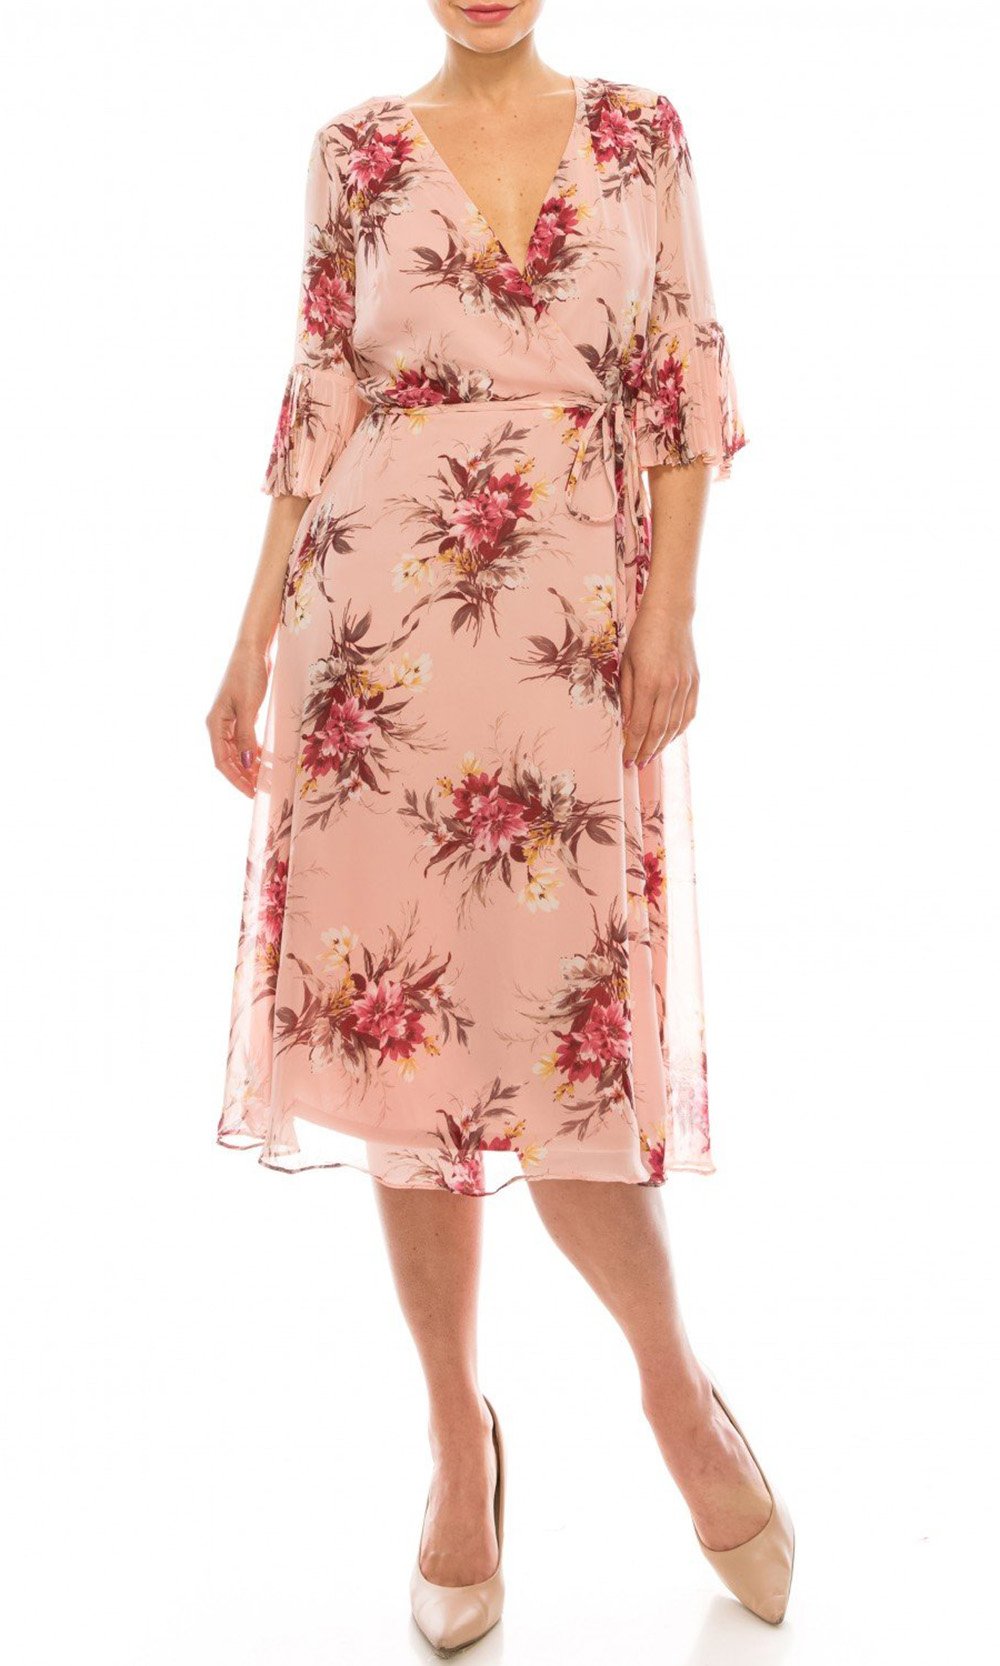 Sandra Darren - 73699 Flounce Sleeve Rose Print Chiffon Dress In Pink and Floral